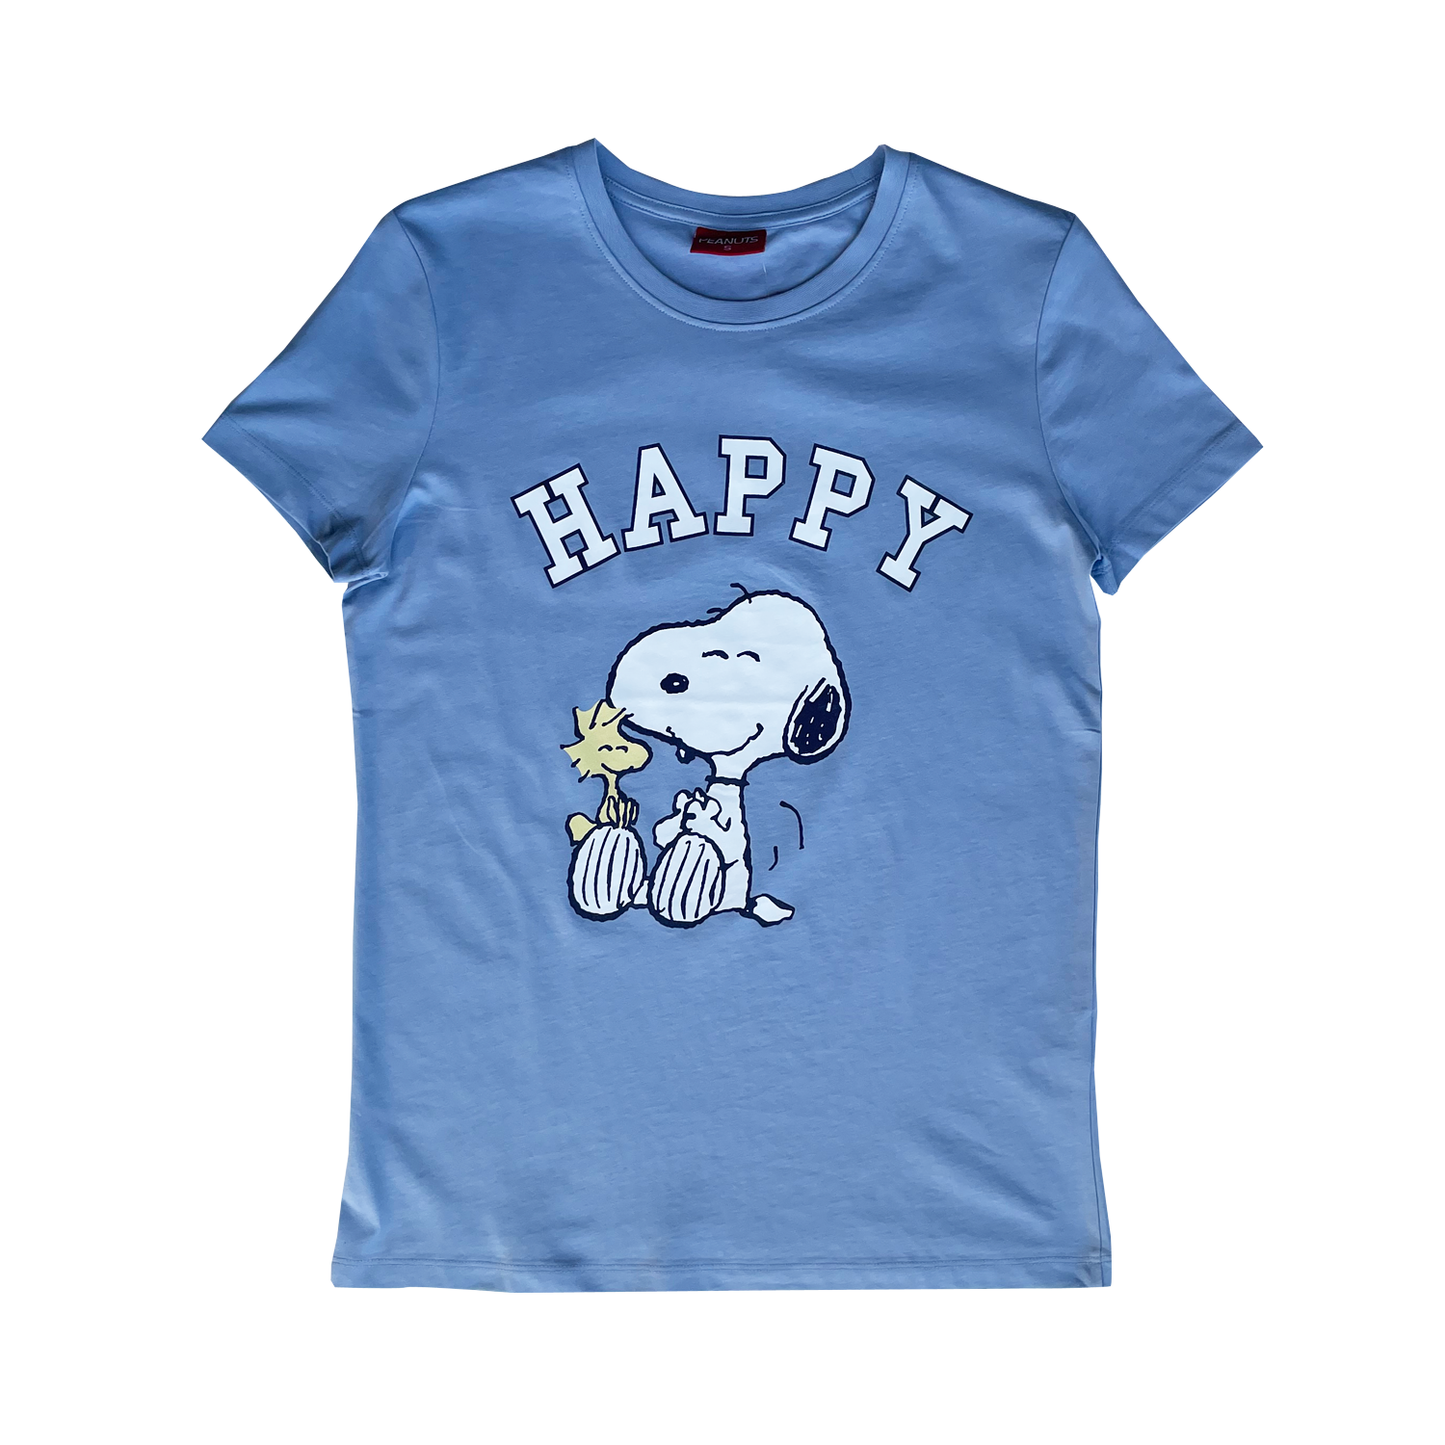 Peanuts - Snoopy Happy T-Shirt